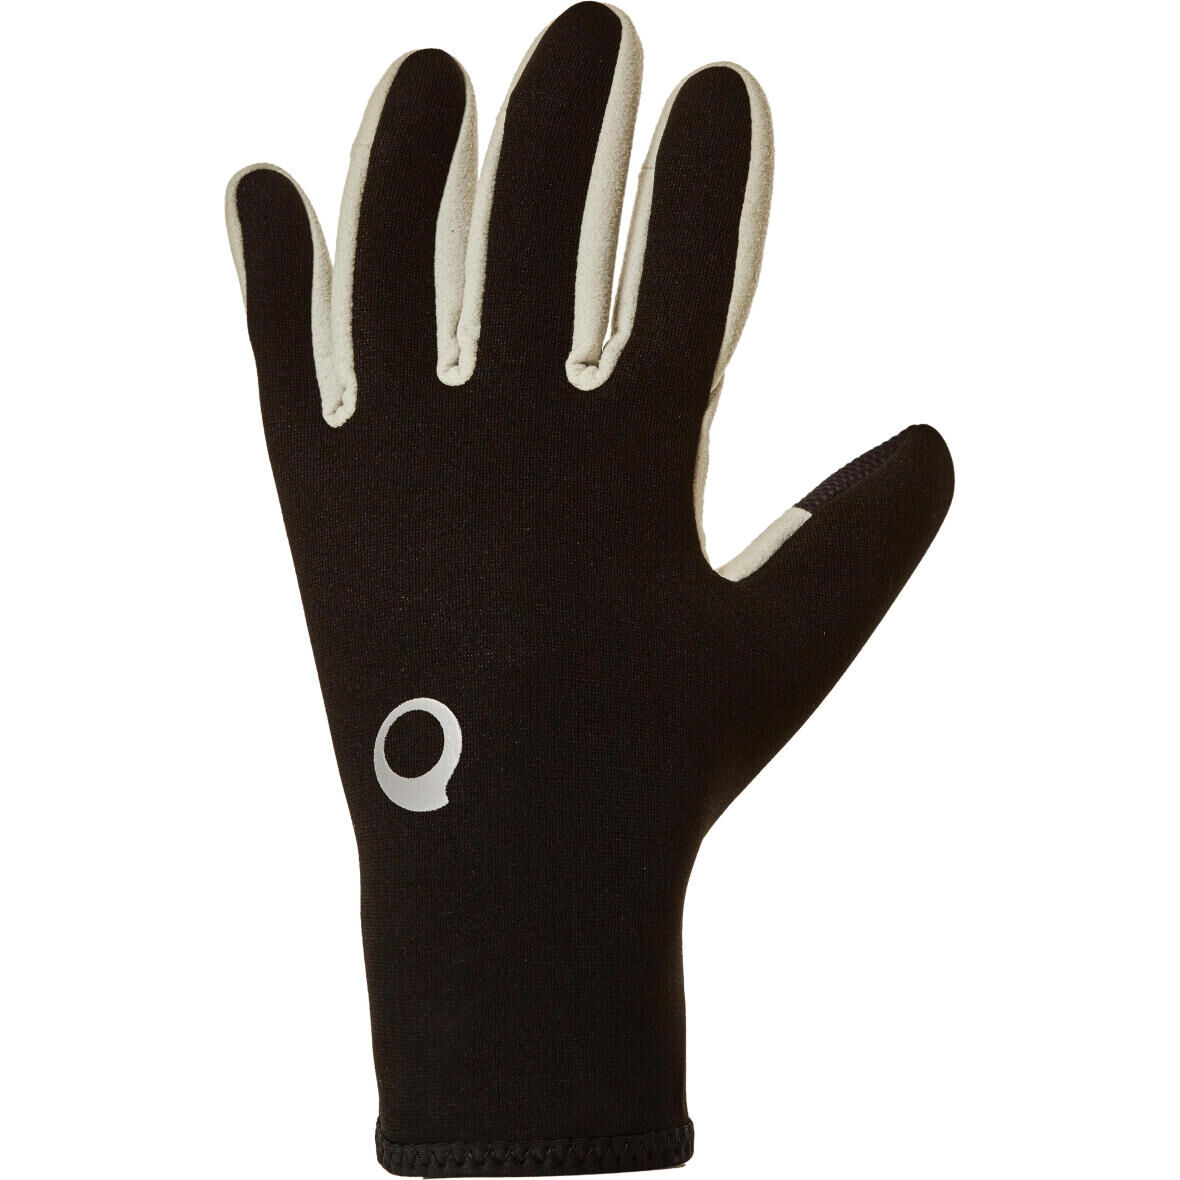 spf gloves 2mm